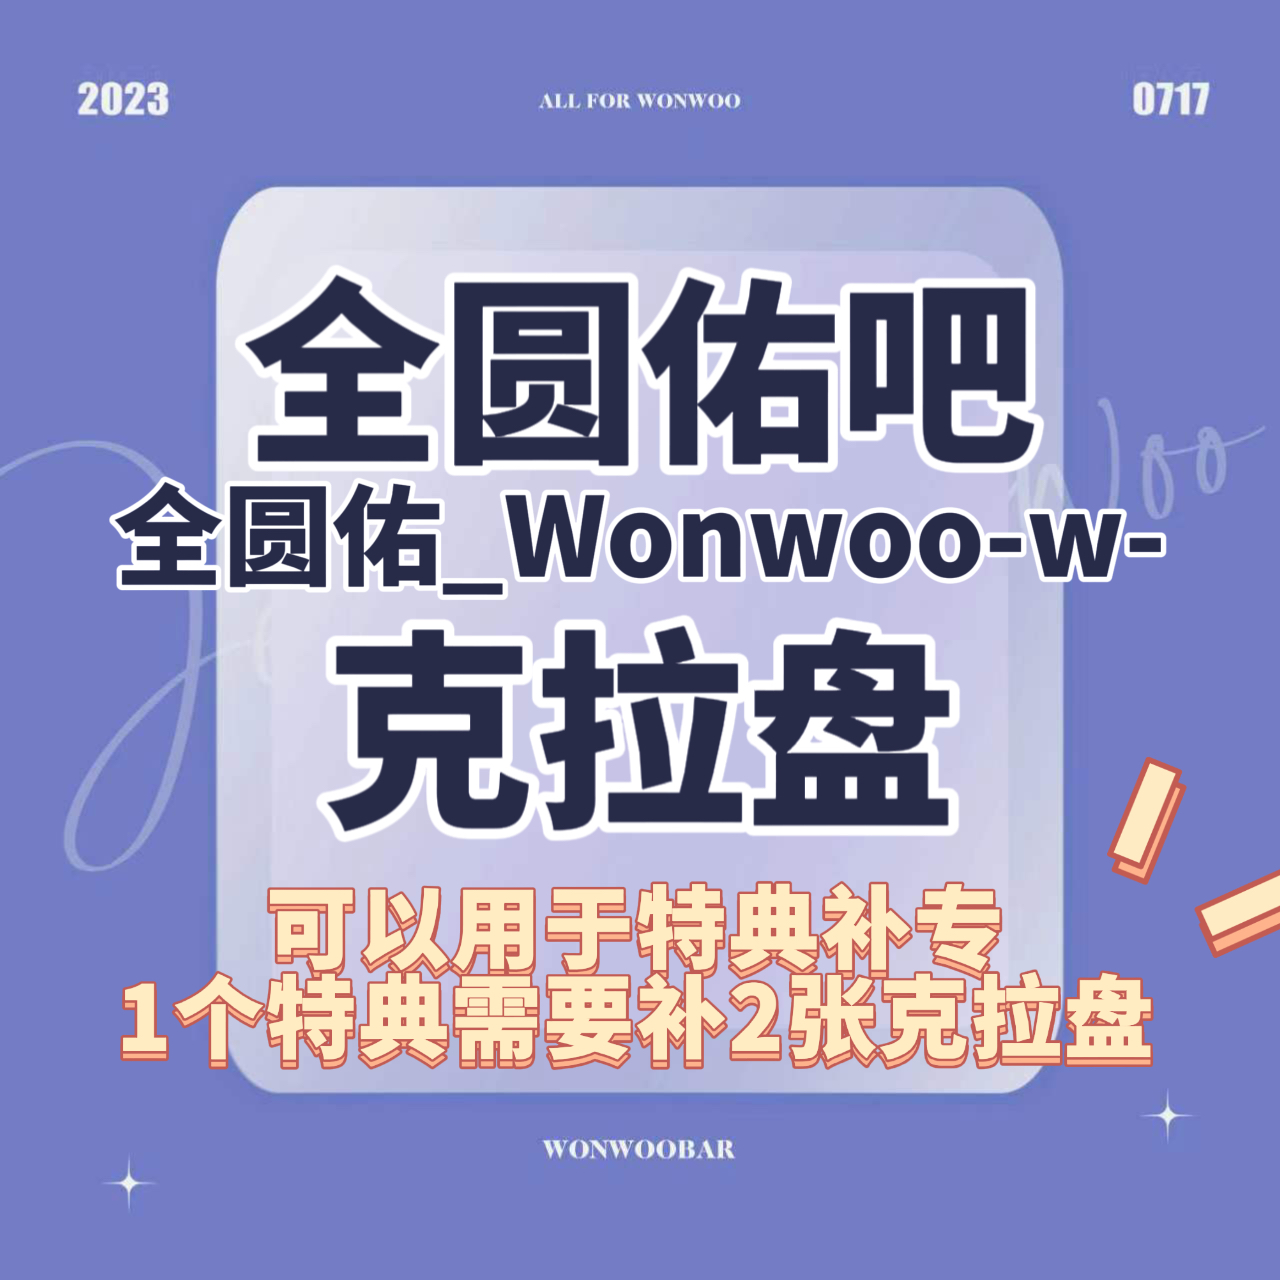 [全款 裸专] [Ktown4u Special Gift] *备注微店手机号 SEVENTEEN - 迷你10辑 [FML] (CARAT Ver.)_全圆佑吧_WonwooBar